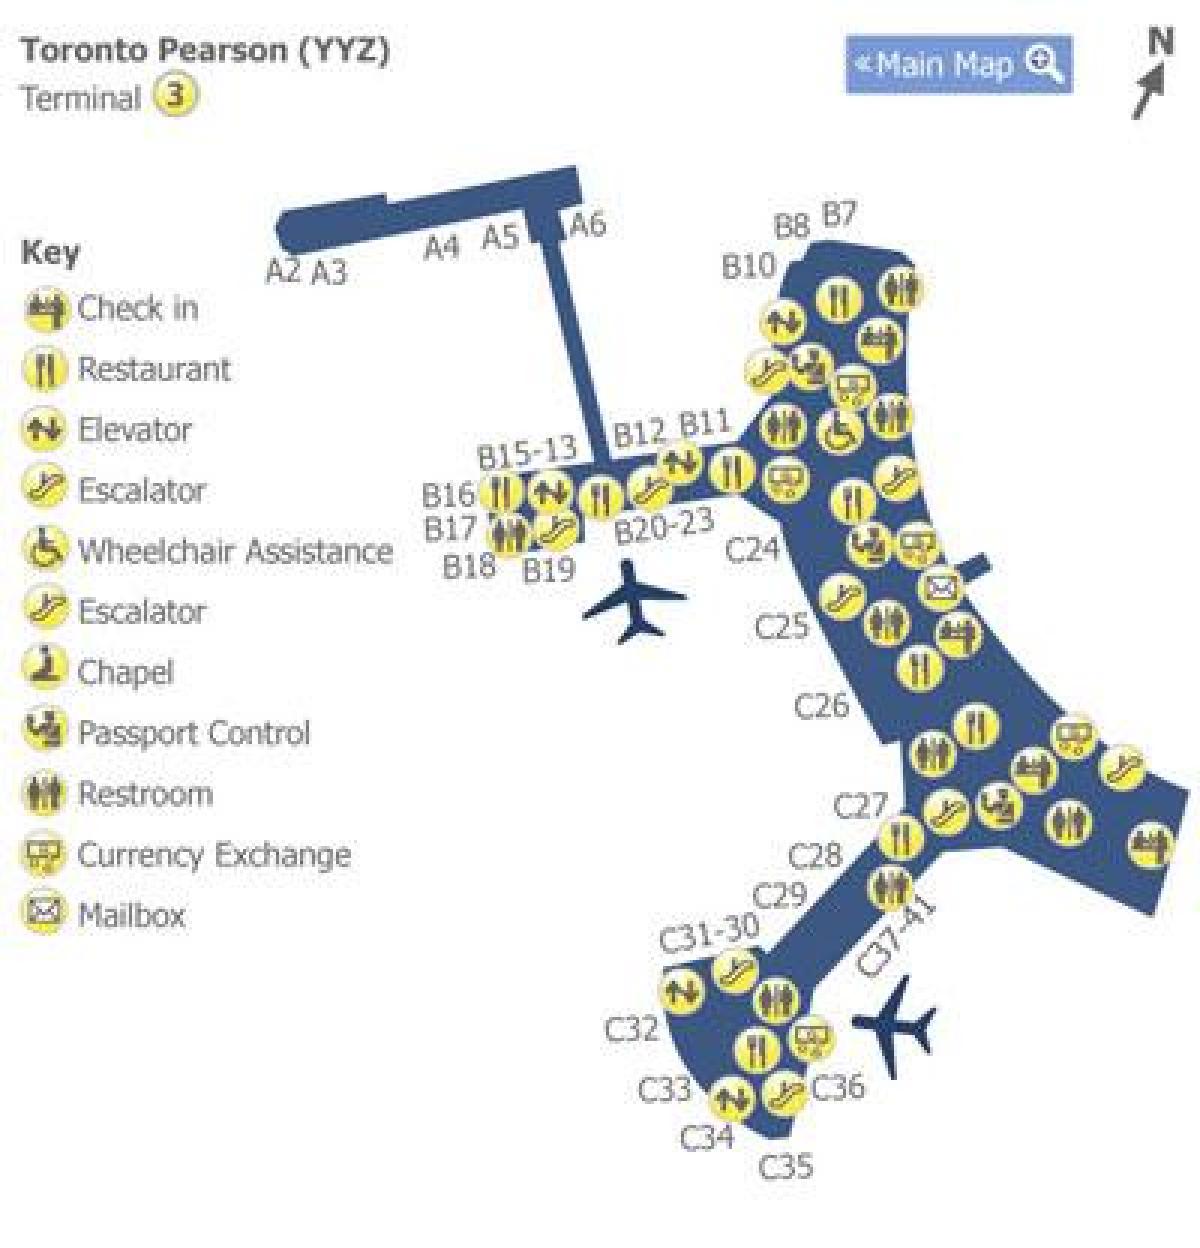 3 Toronto haritası Pearson airport terminal 